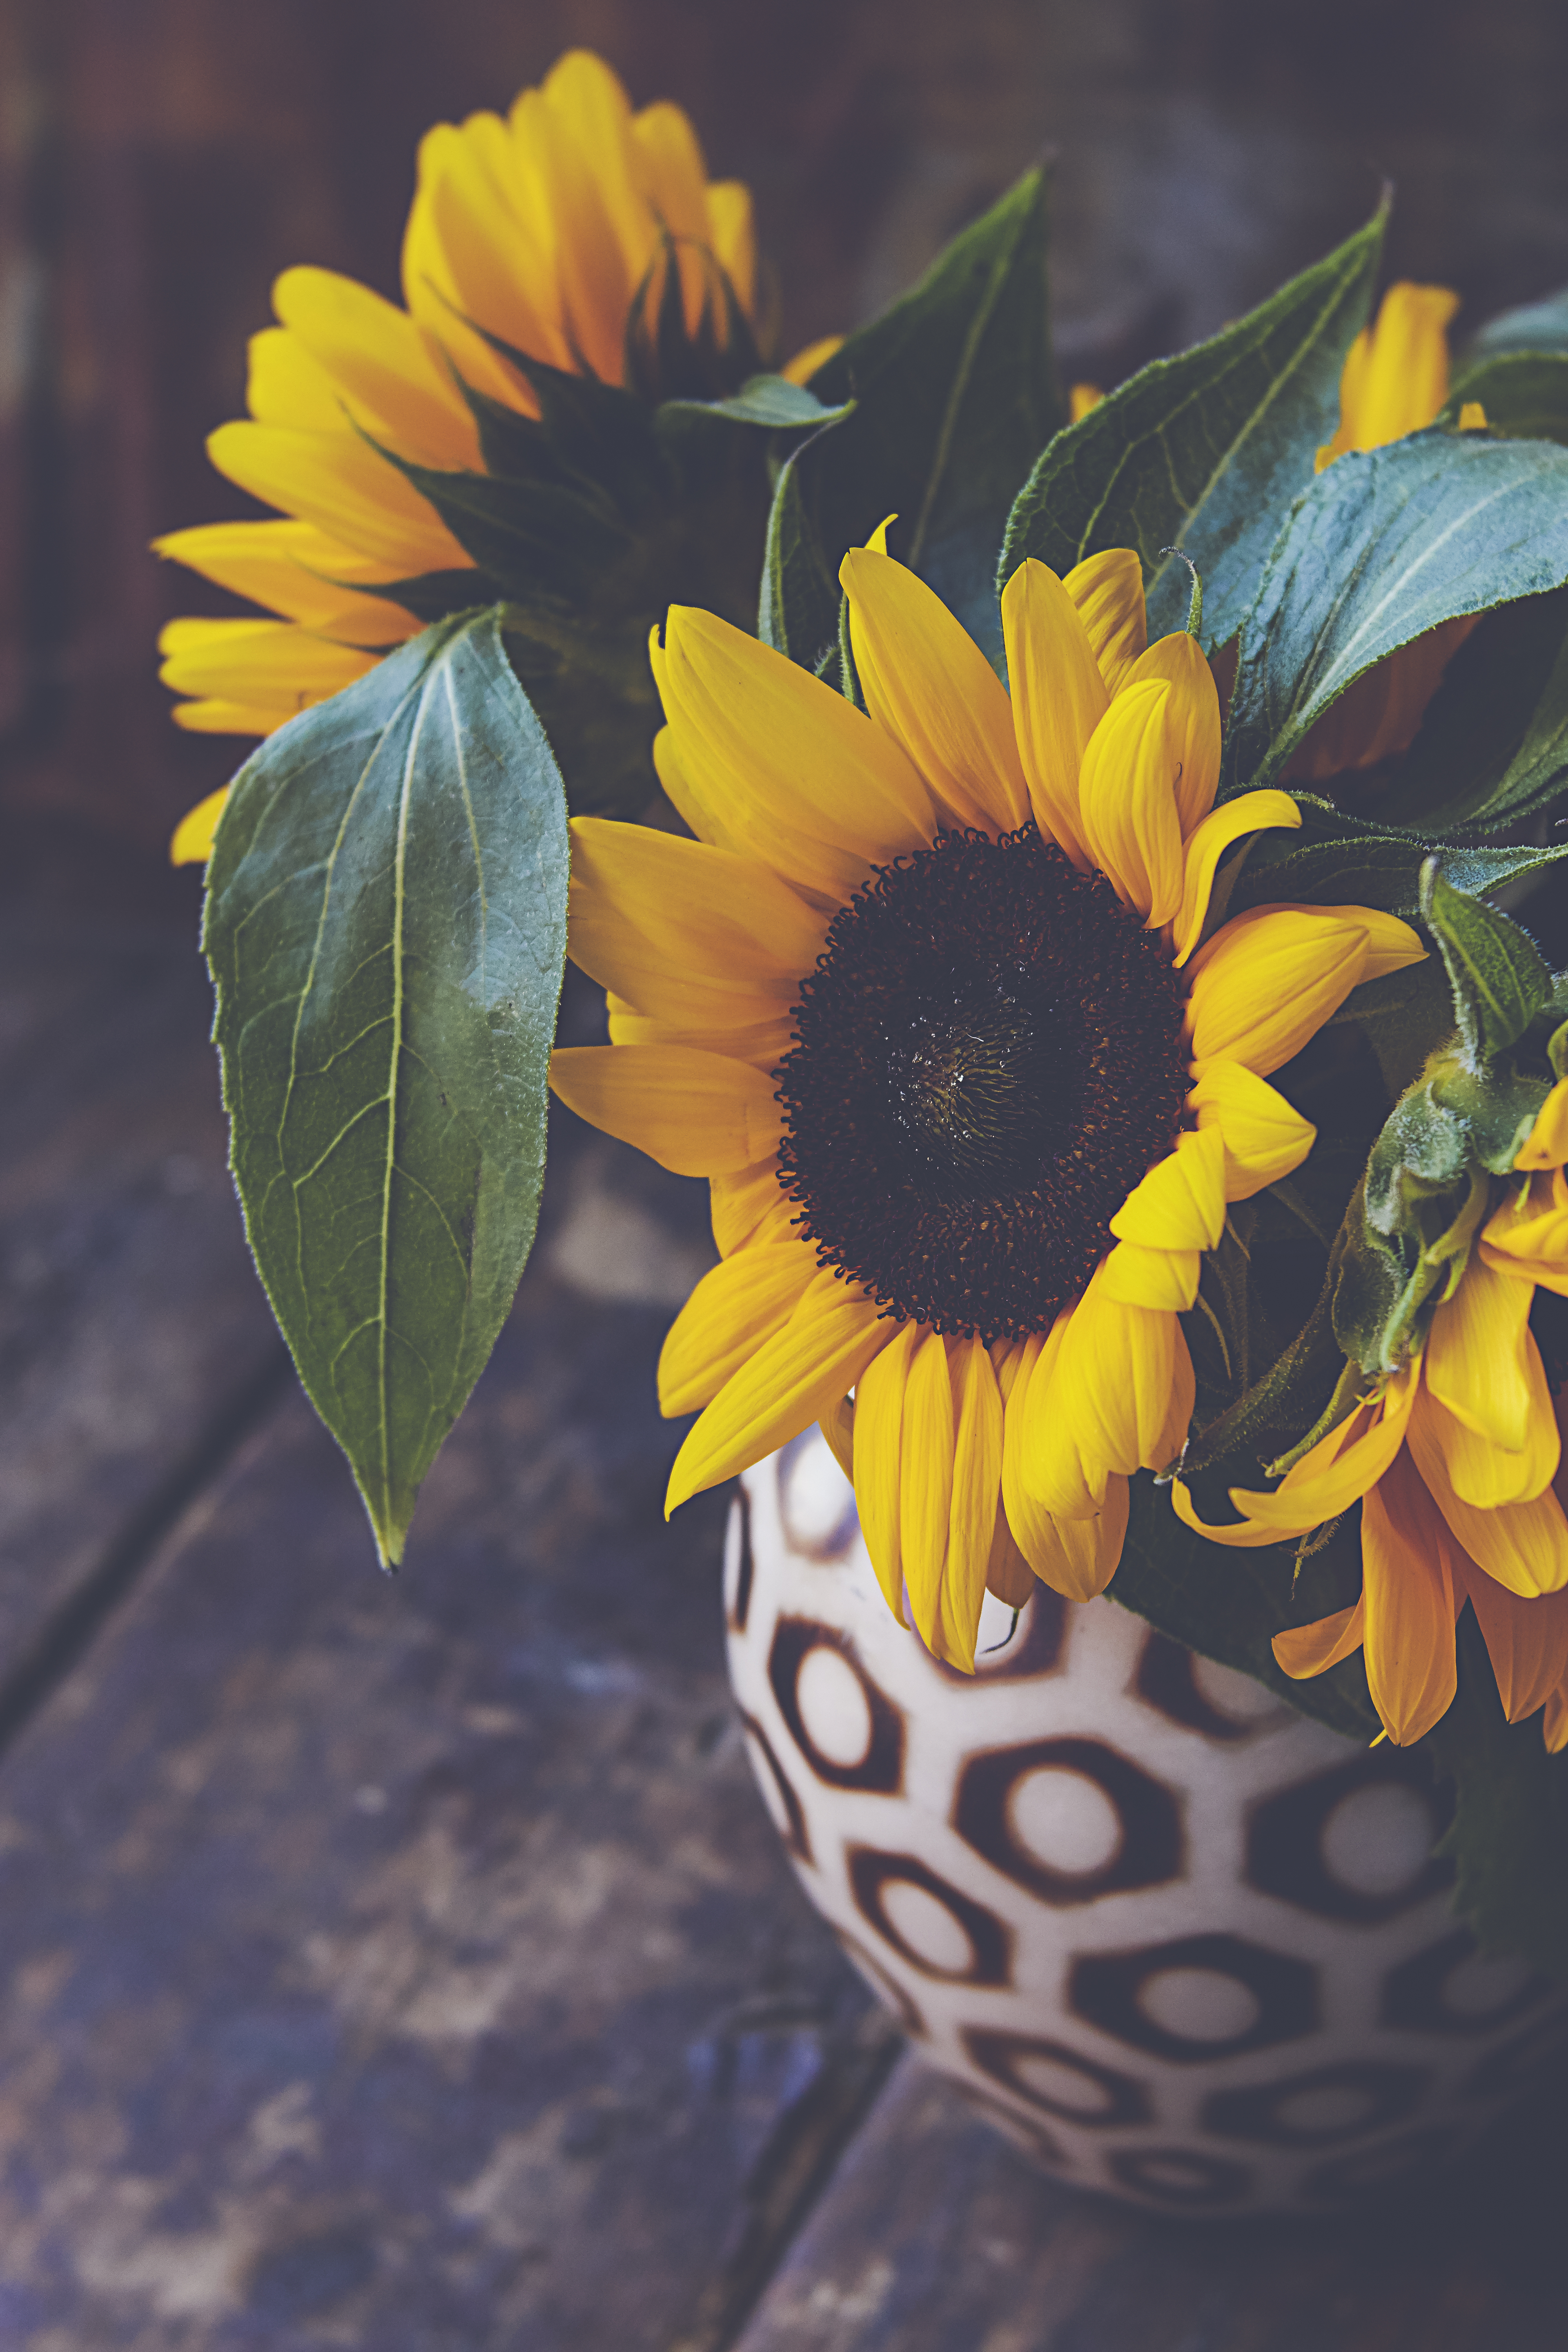 Sunflower Wallpaper - iPhone, Android & Desktop Backgrounds